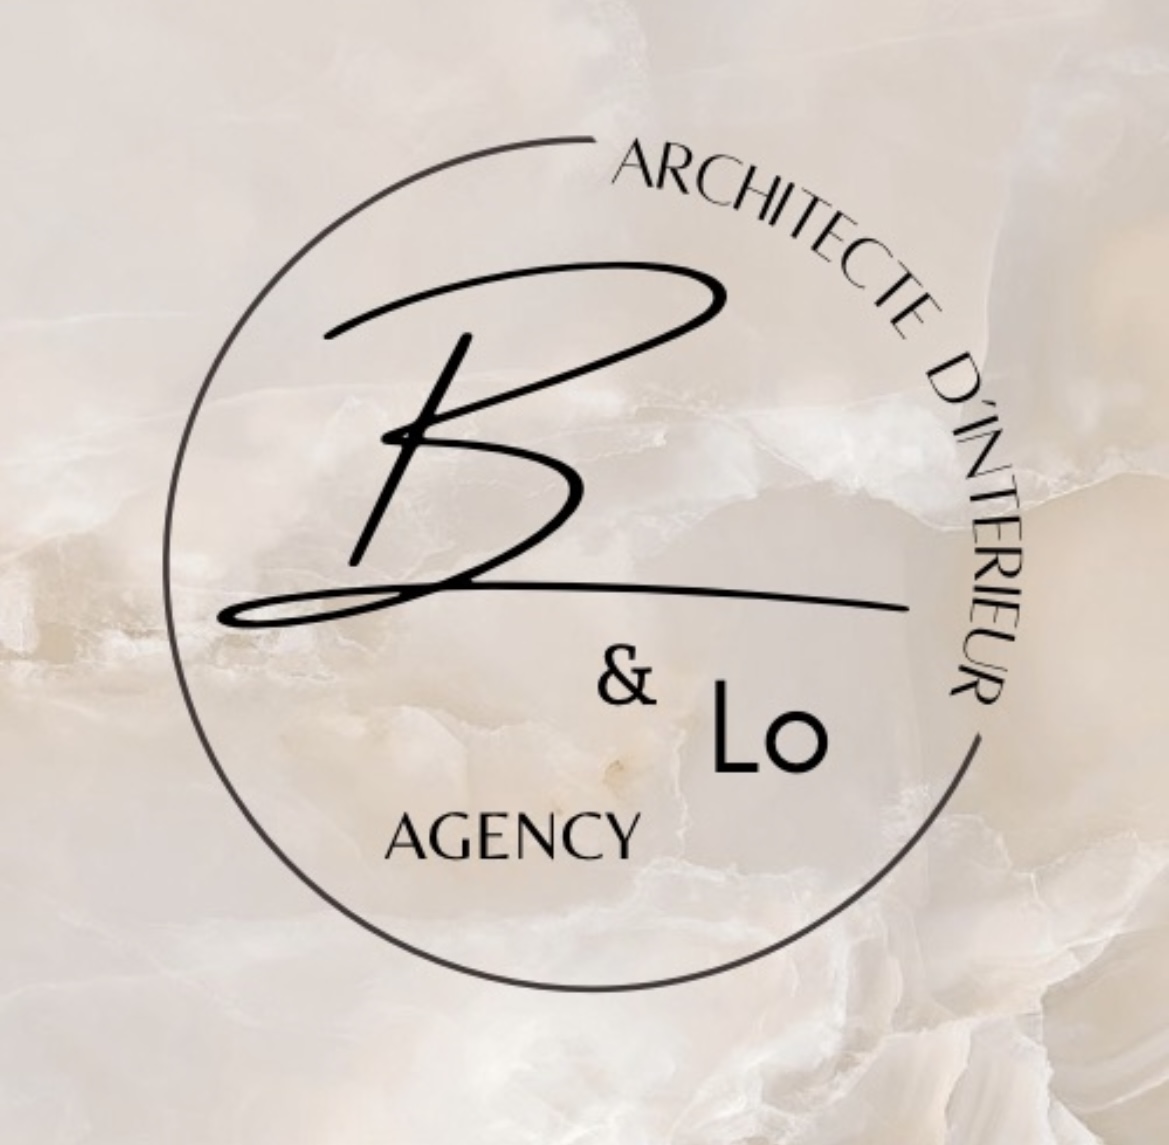 B&lo agency